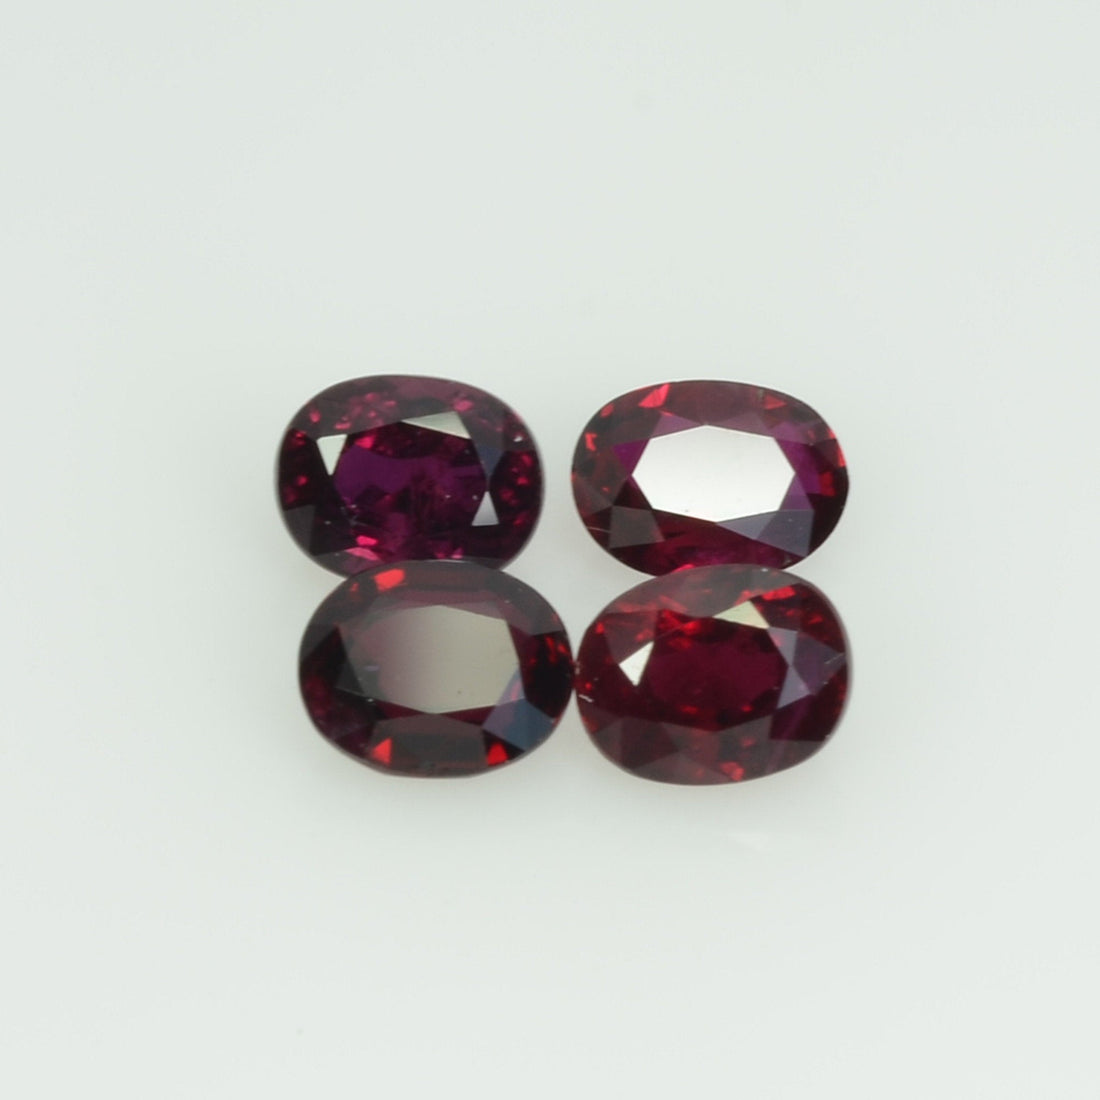 4.5x3.5 Natural Thai Ruby Loose Gemstone Oval Cut - Thai Gems Export Ltd.